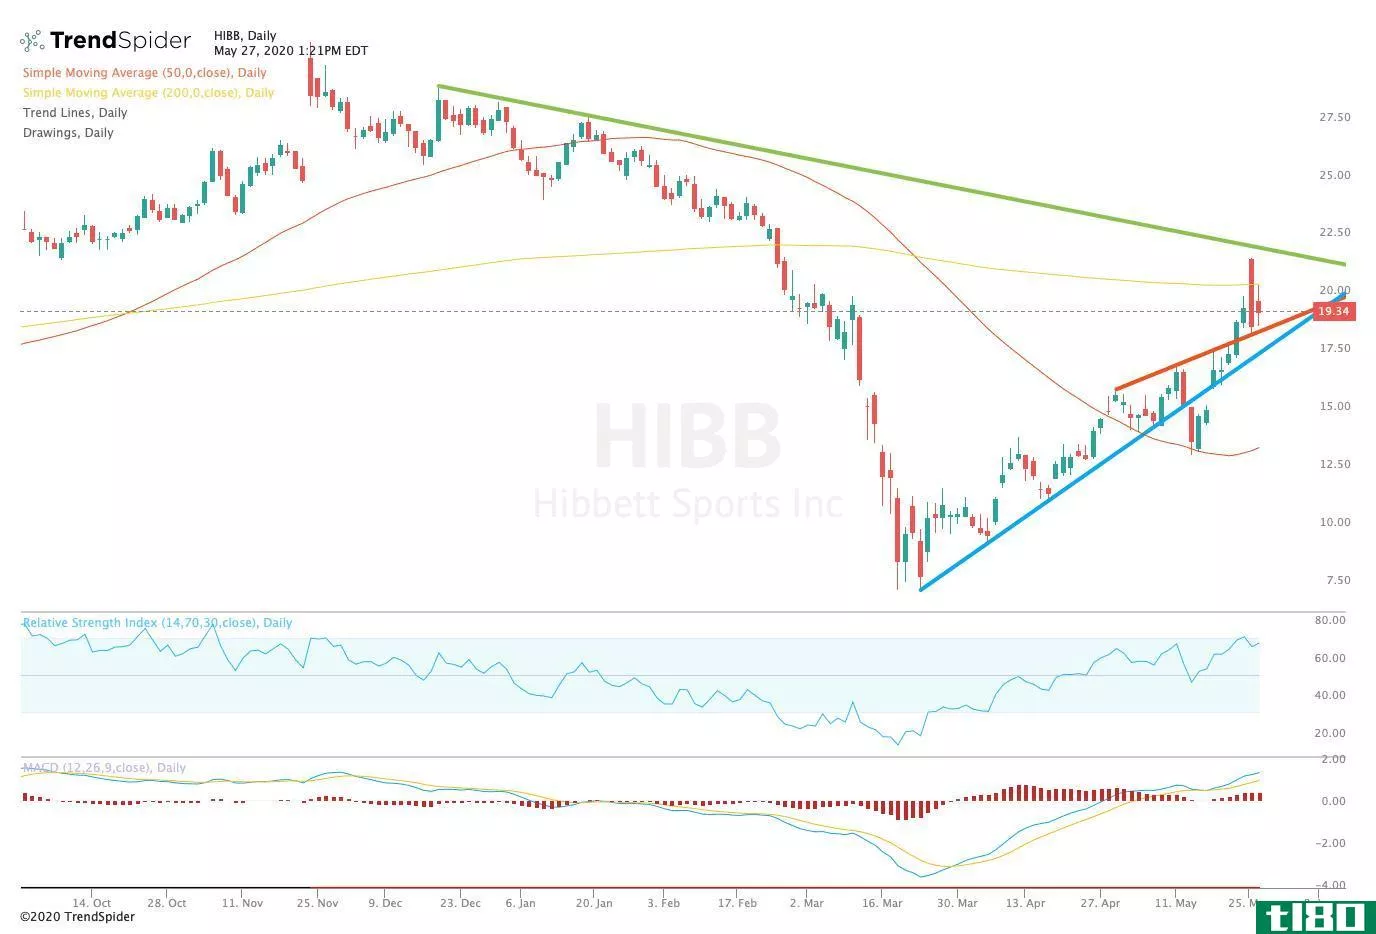 Chart showing the share price performance of Hibbett Sports, Inc. (HIBB)